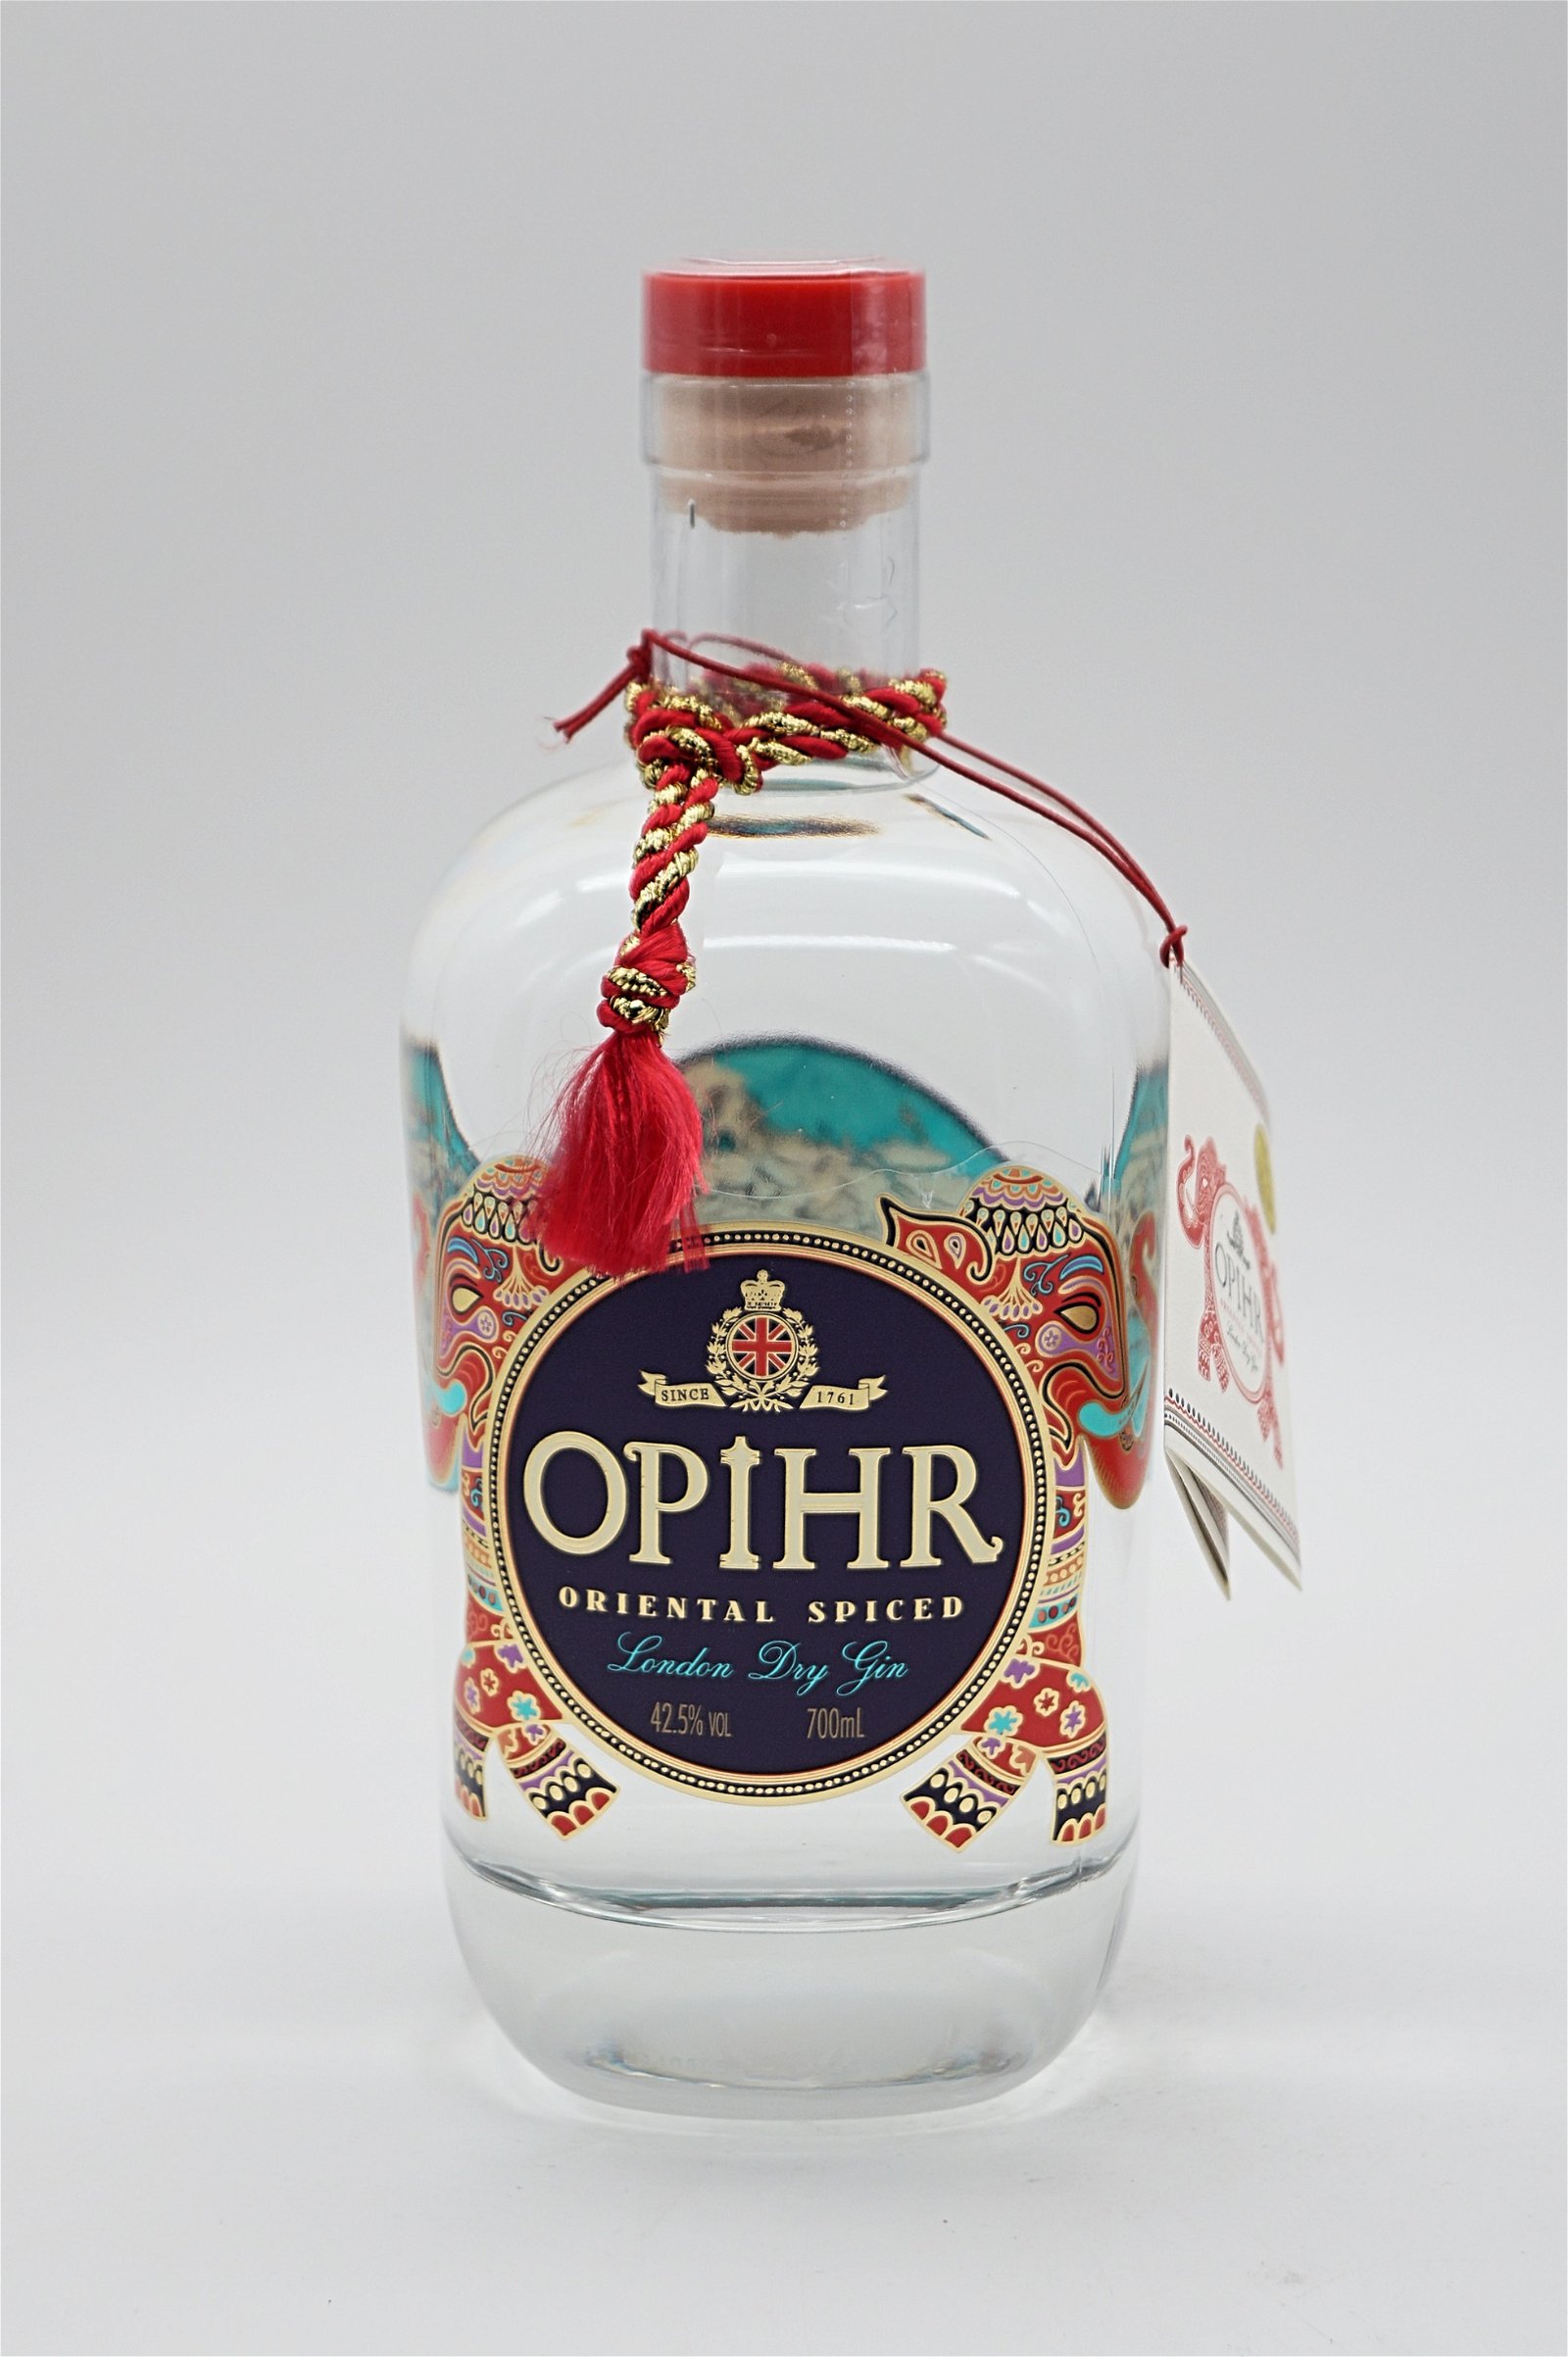 Opihr Oriental Spiced London Dry Gin